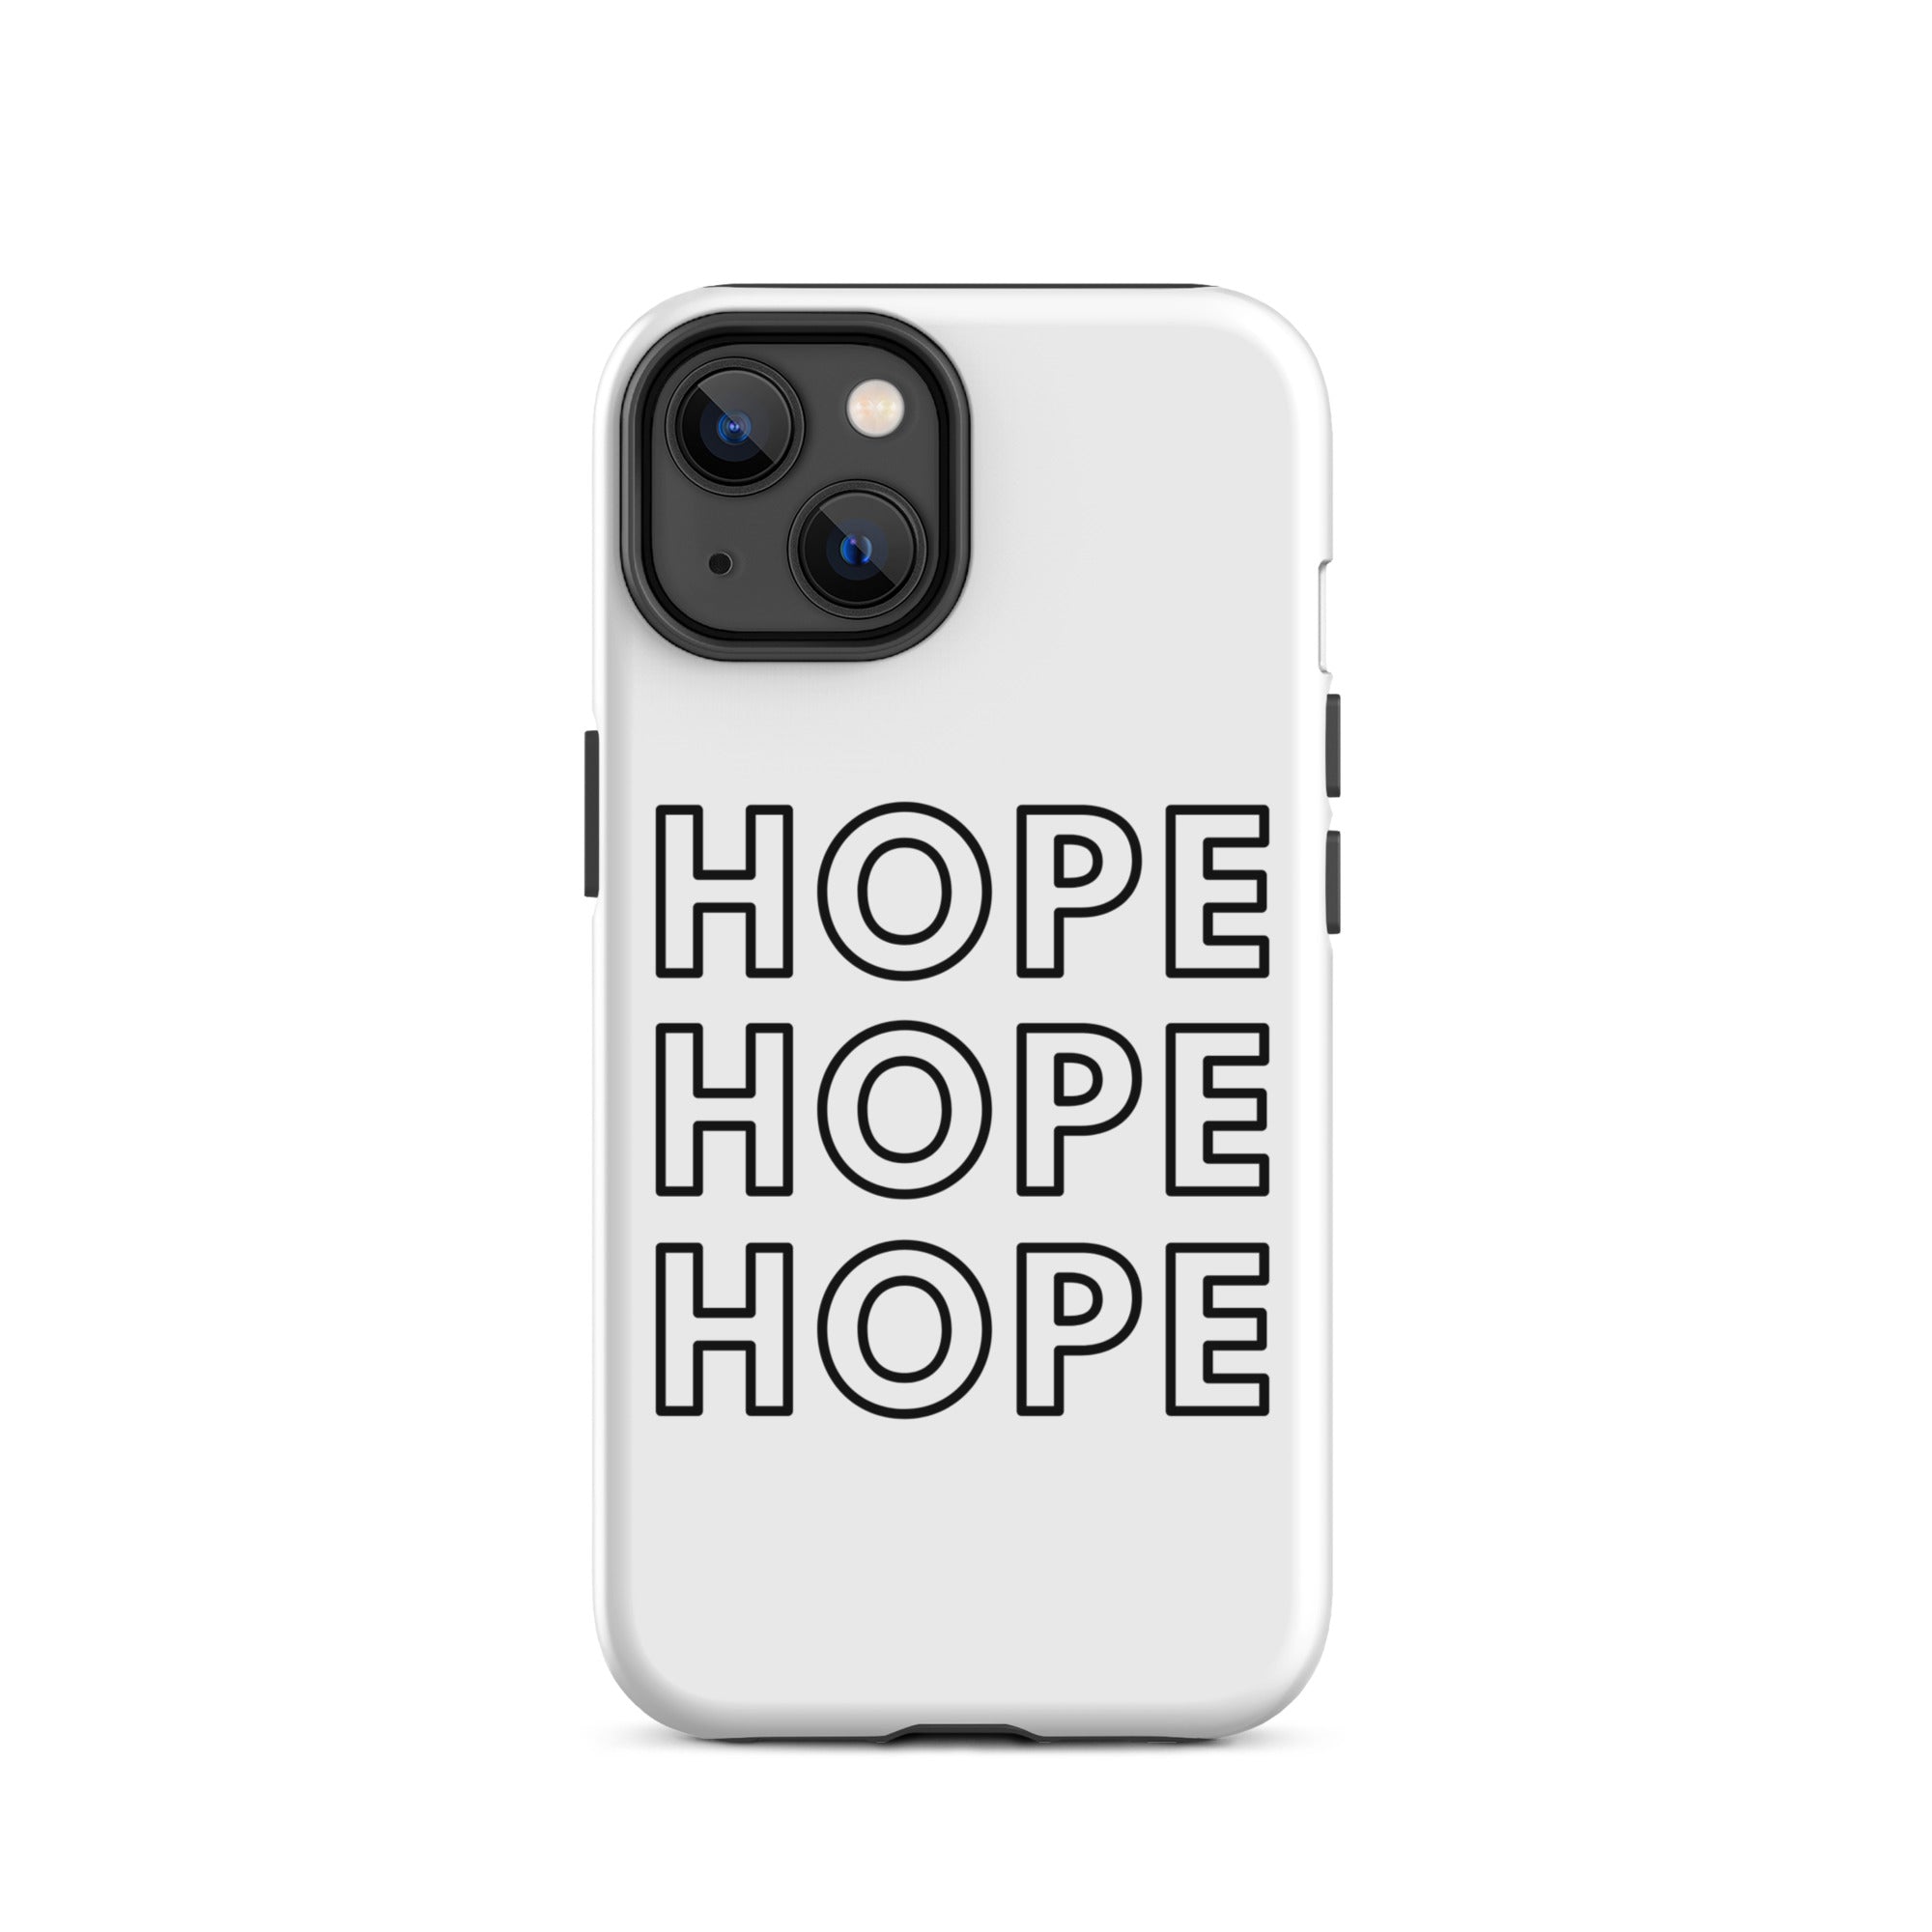 Hope - Tough iPhone case